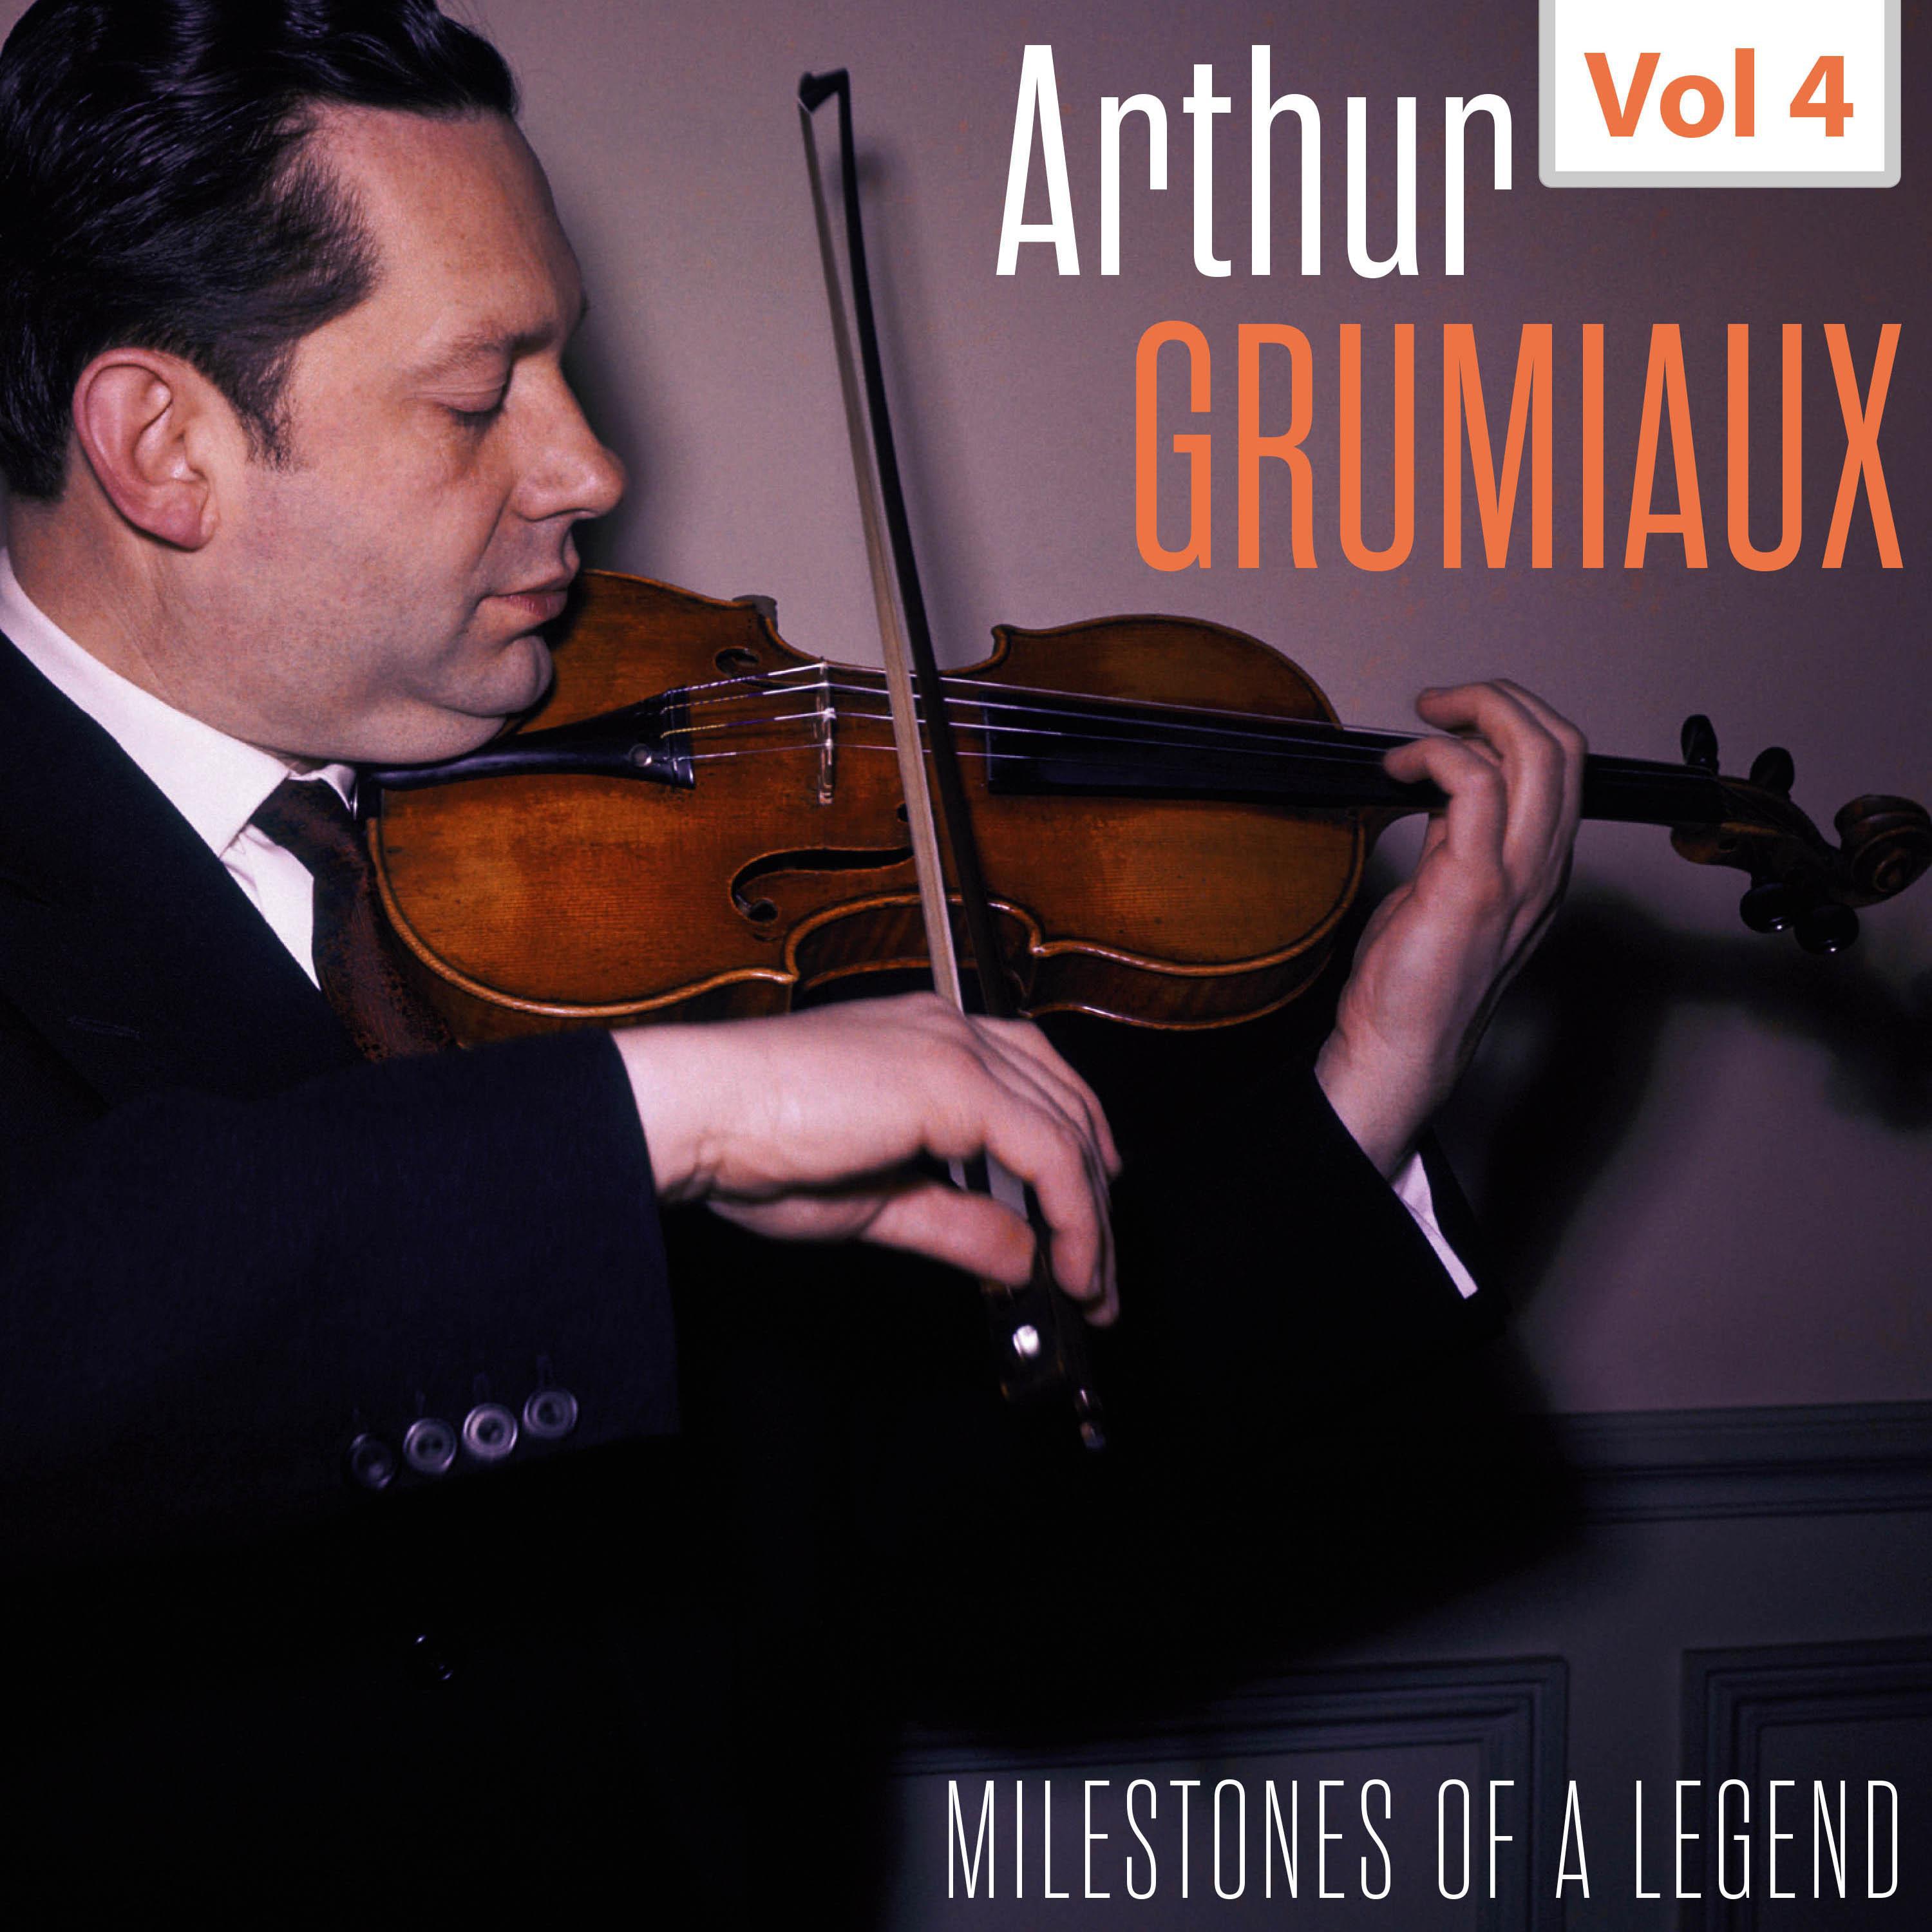 Milestones of a Legend - Arthur Grumiaux, Vol. 4